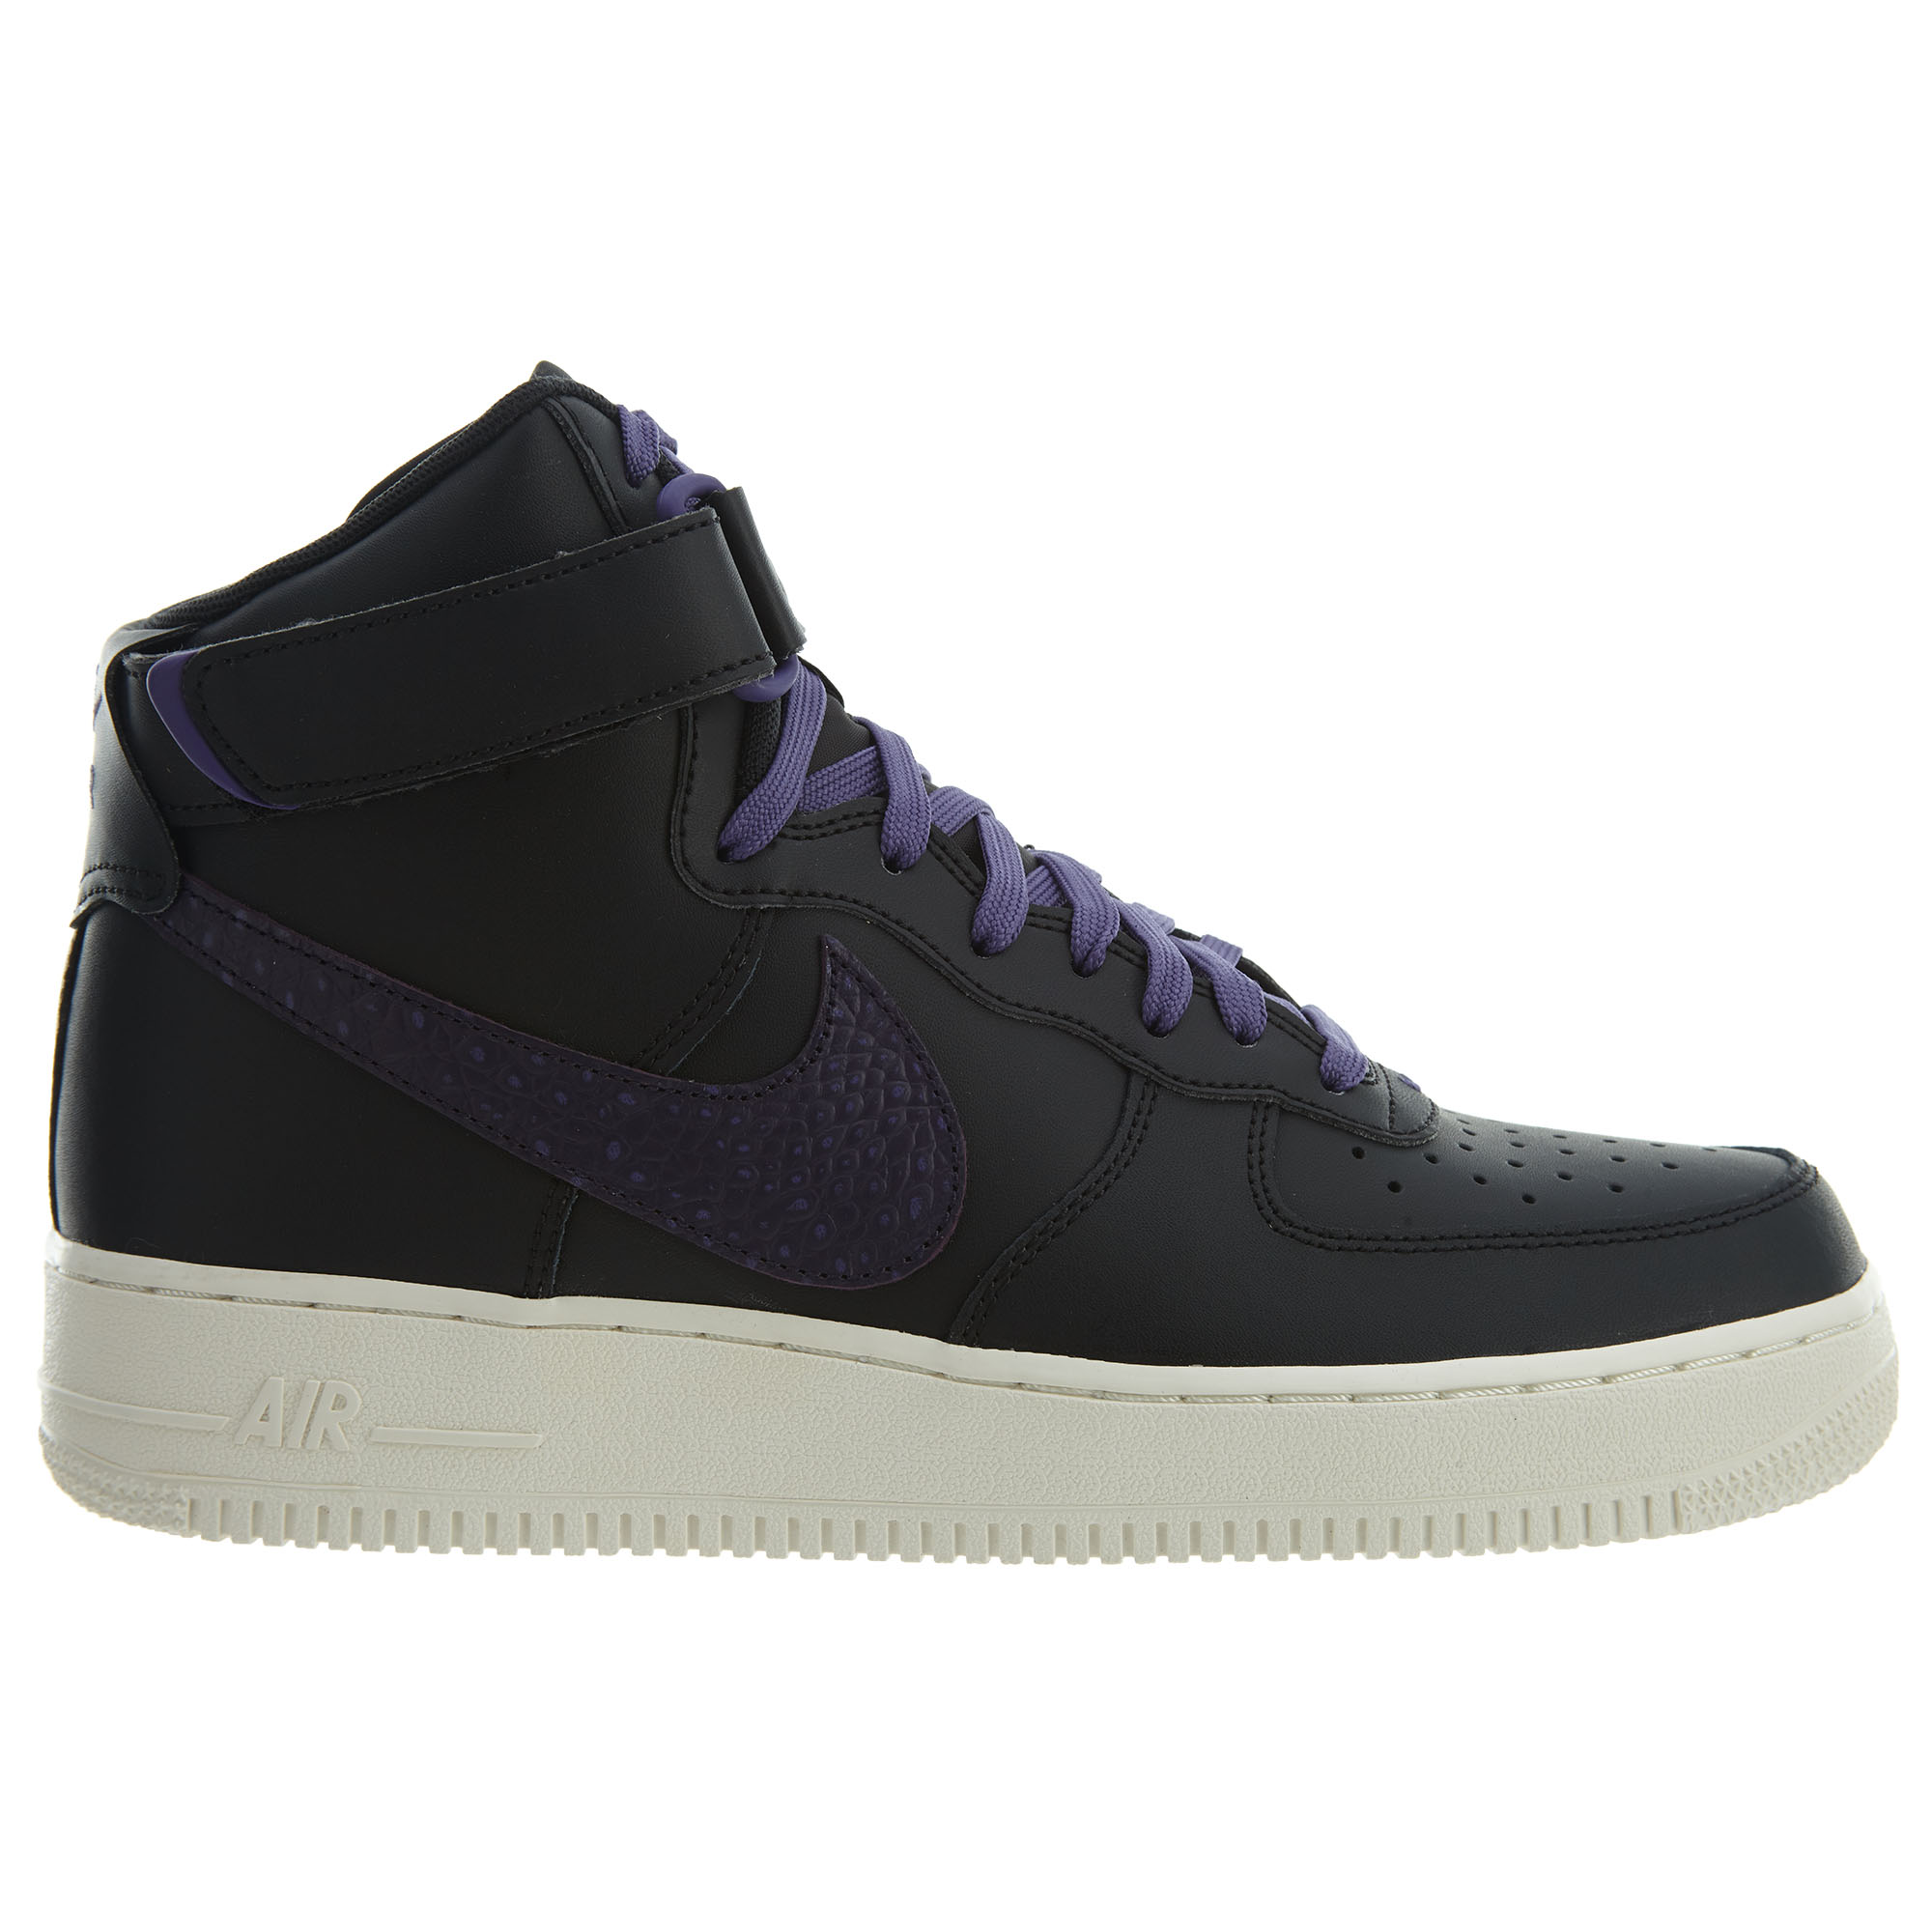 07 LV8 Black Court Purple-Sail - 806403-014